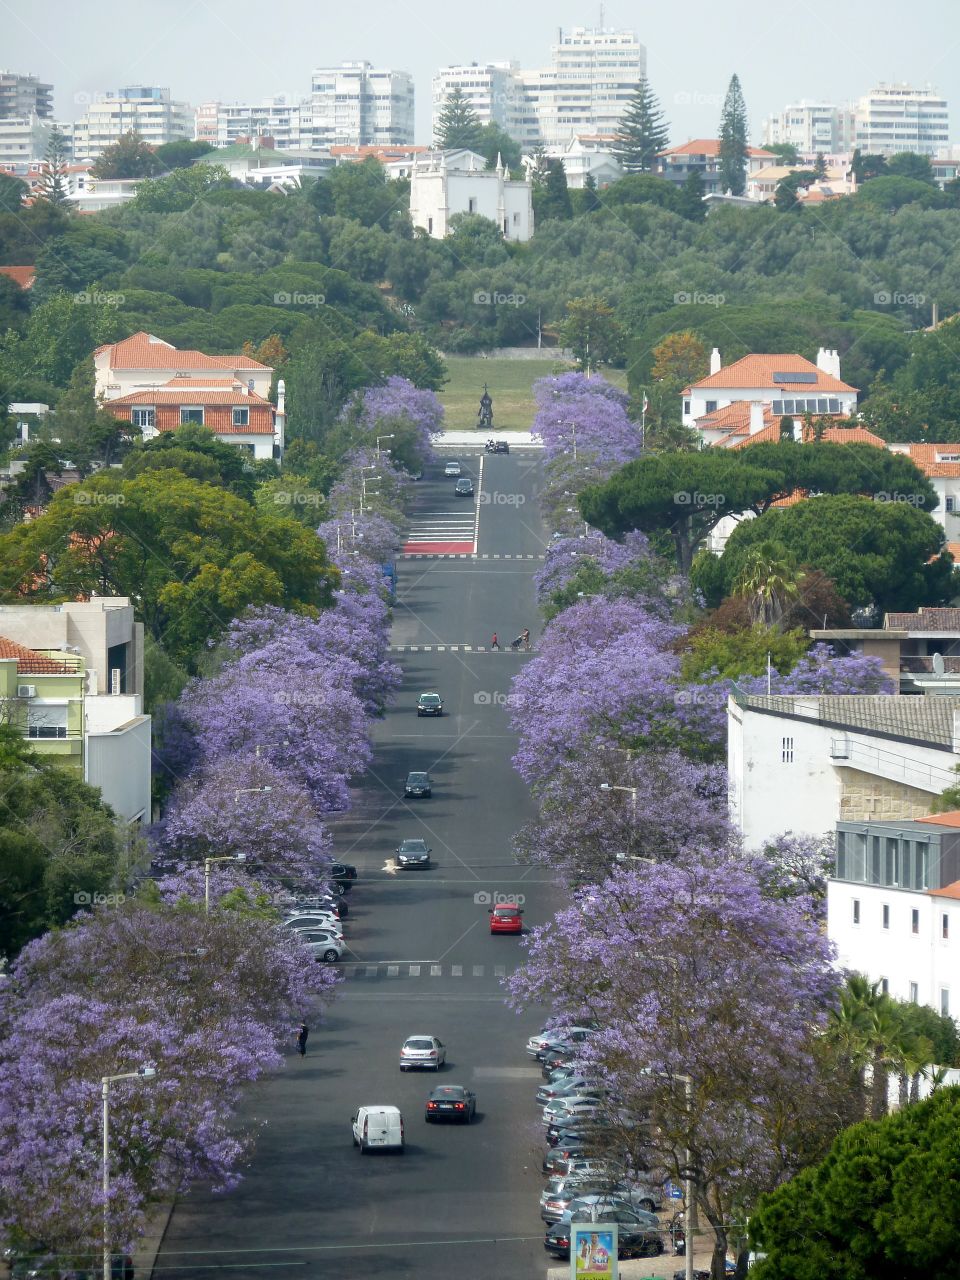 Streets of Lisbon 